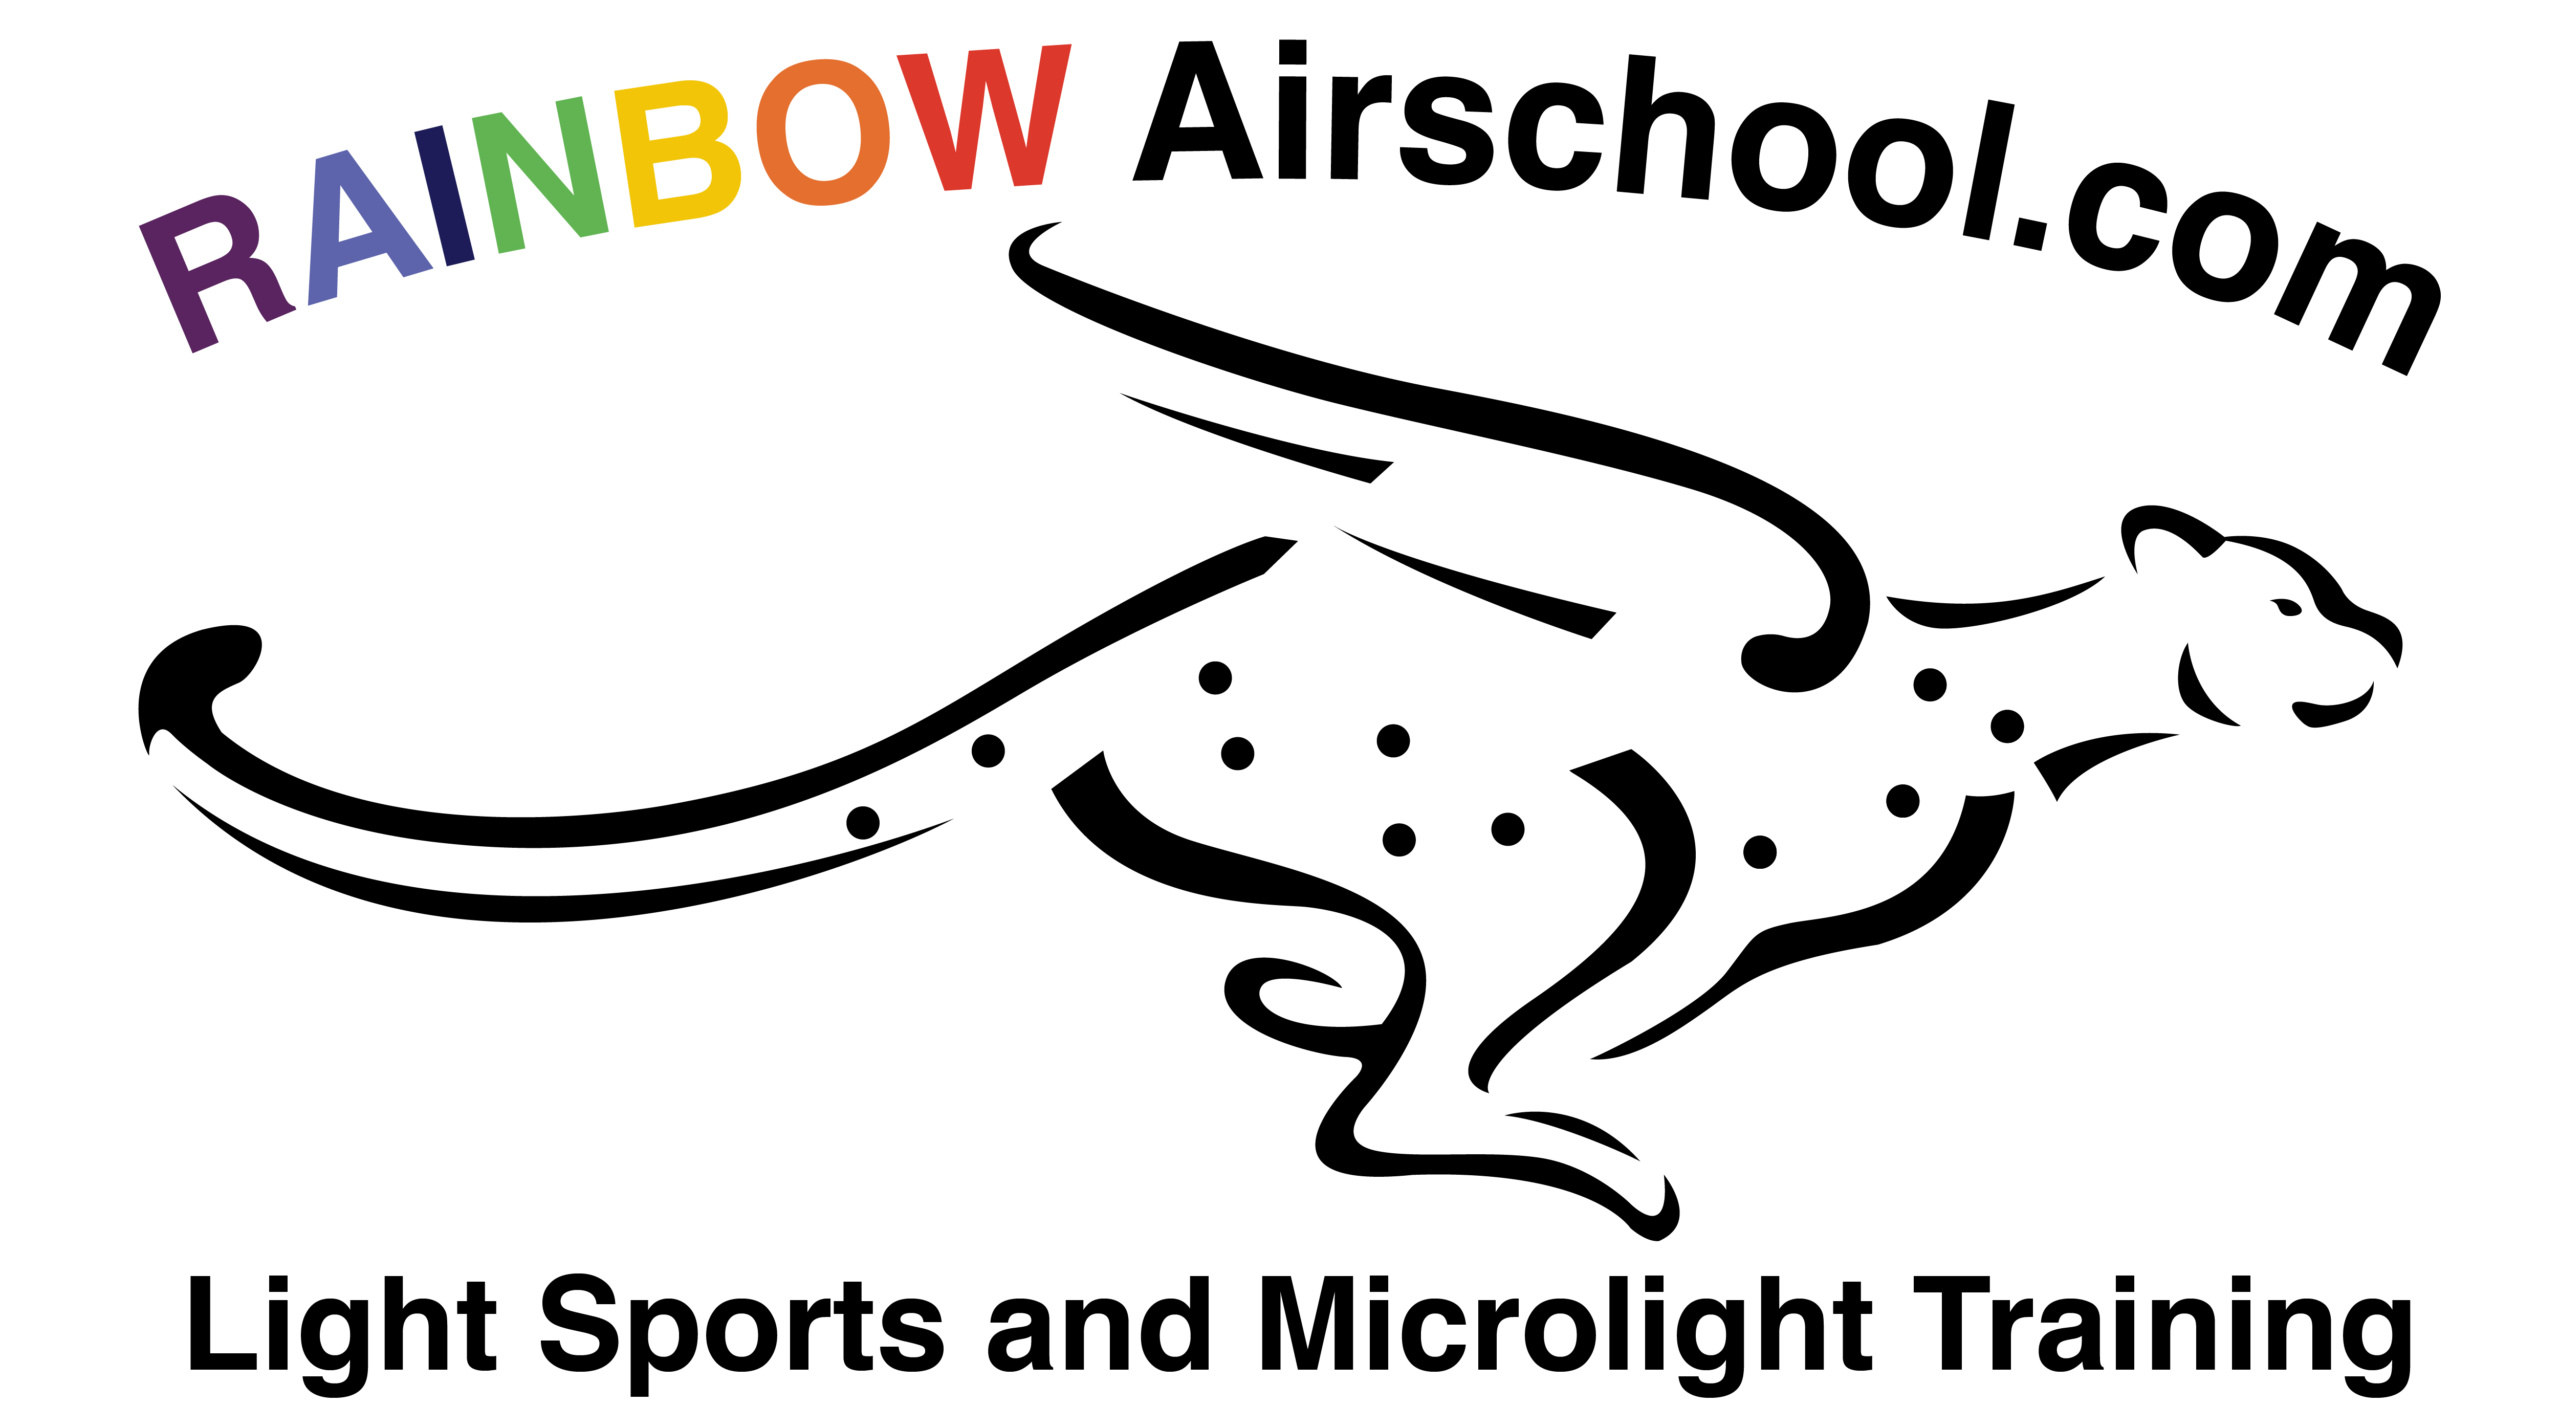 Rainbow Airschool